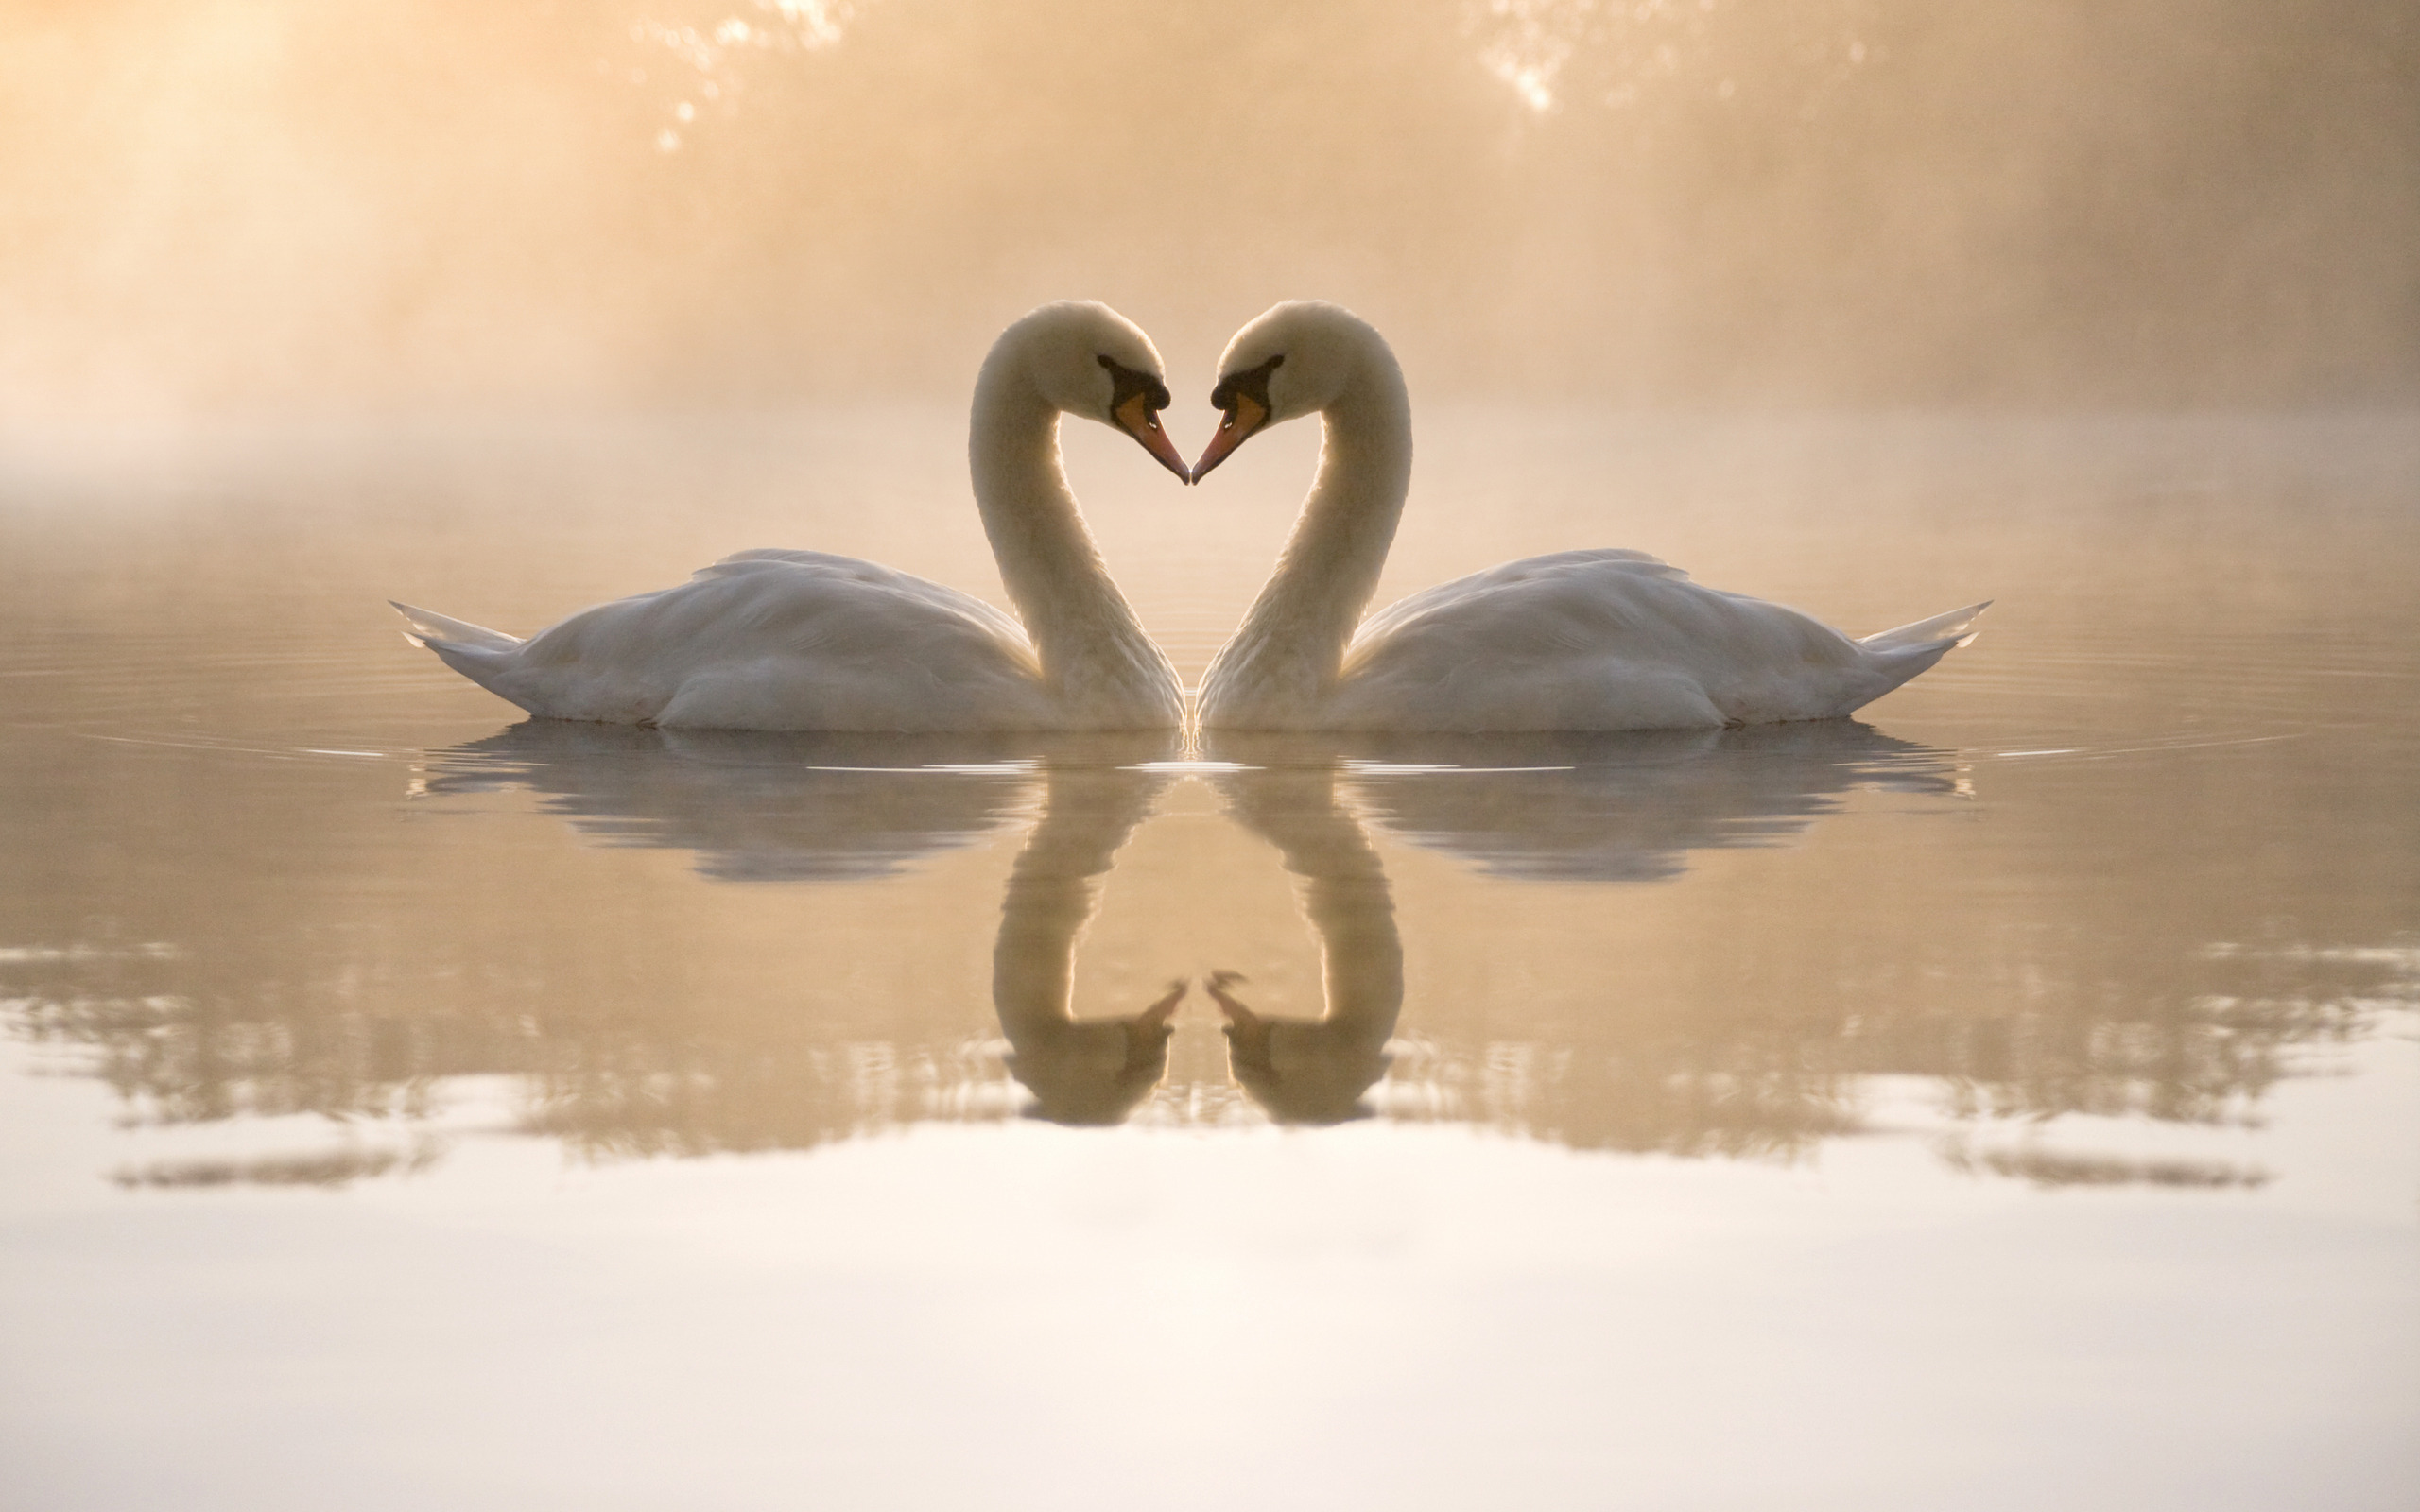 Popular Mute Swan Image for Phone